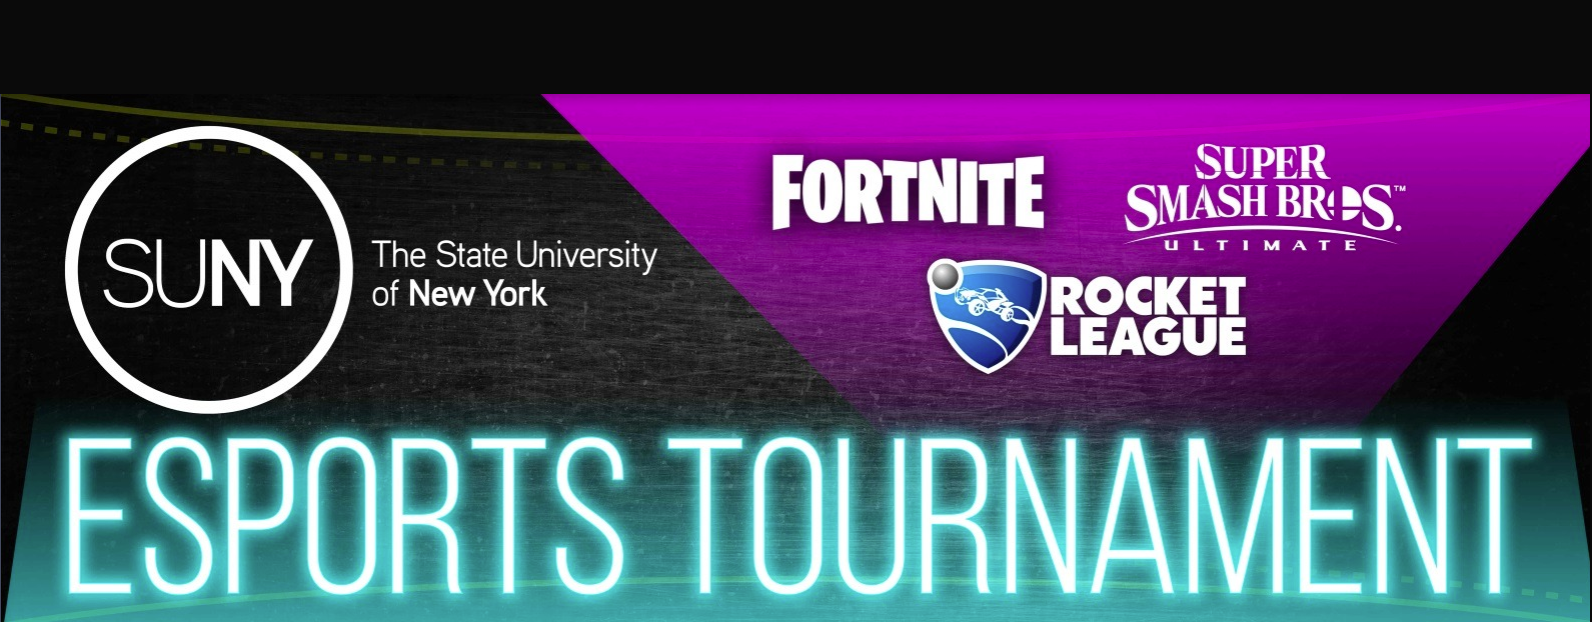 SUNY Esports Tournament Banner